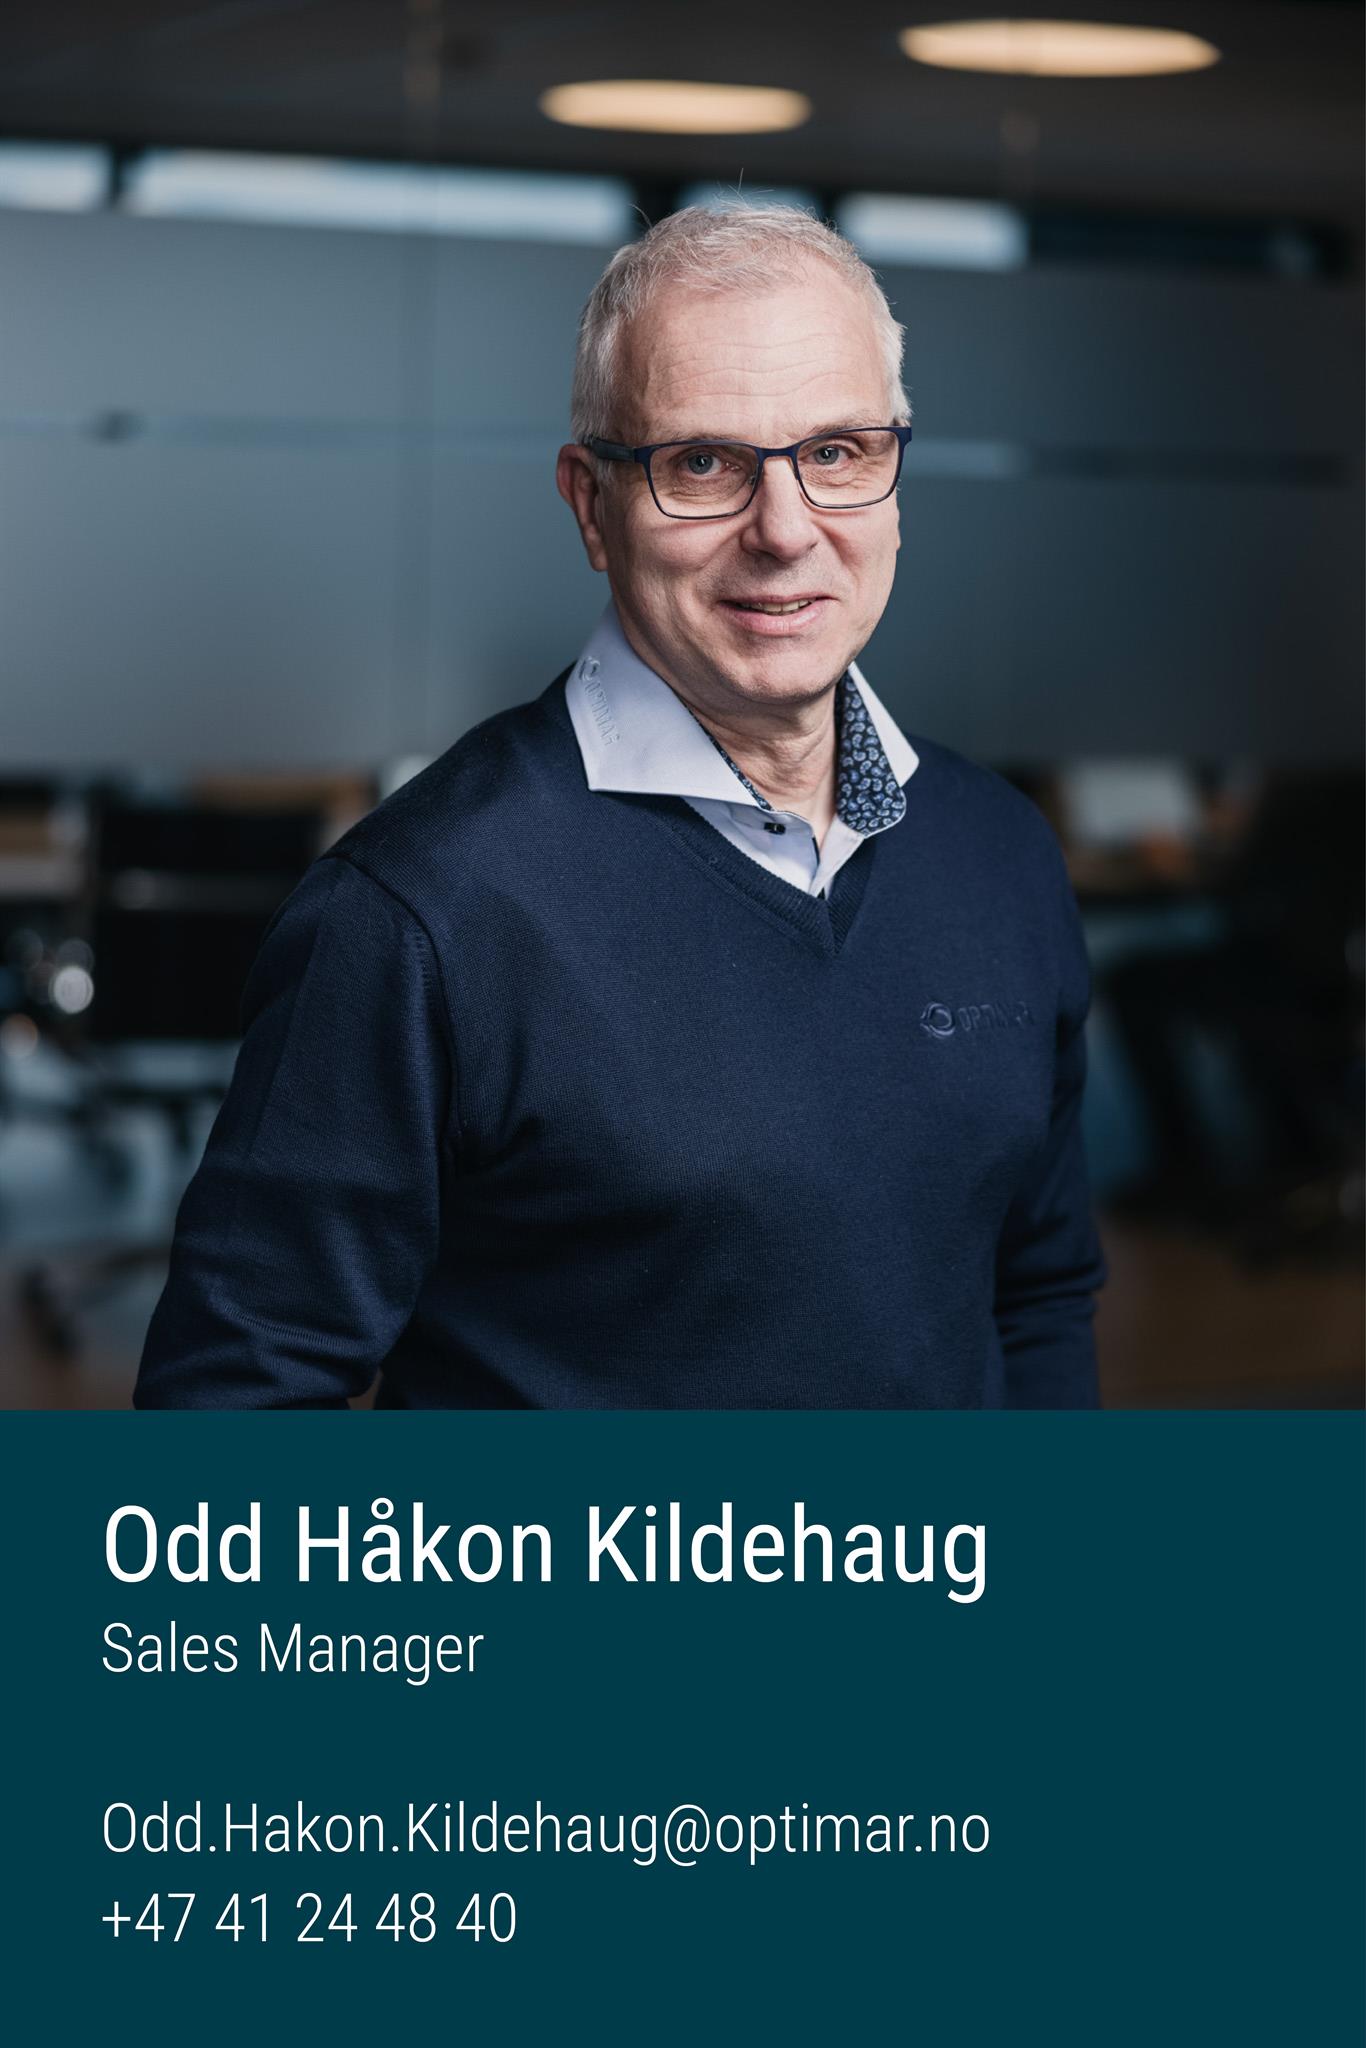 Odd Håkon Kildehaug